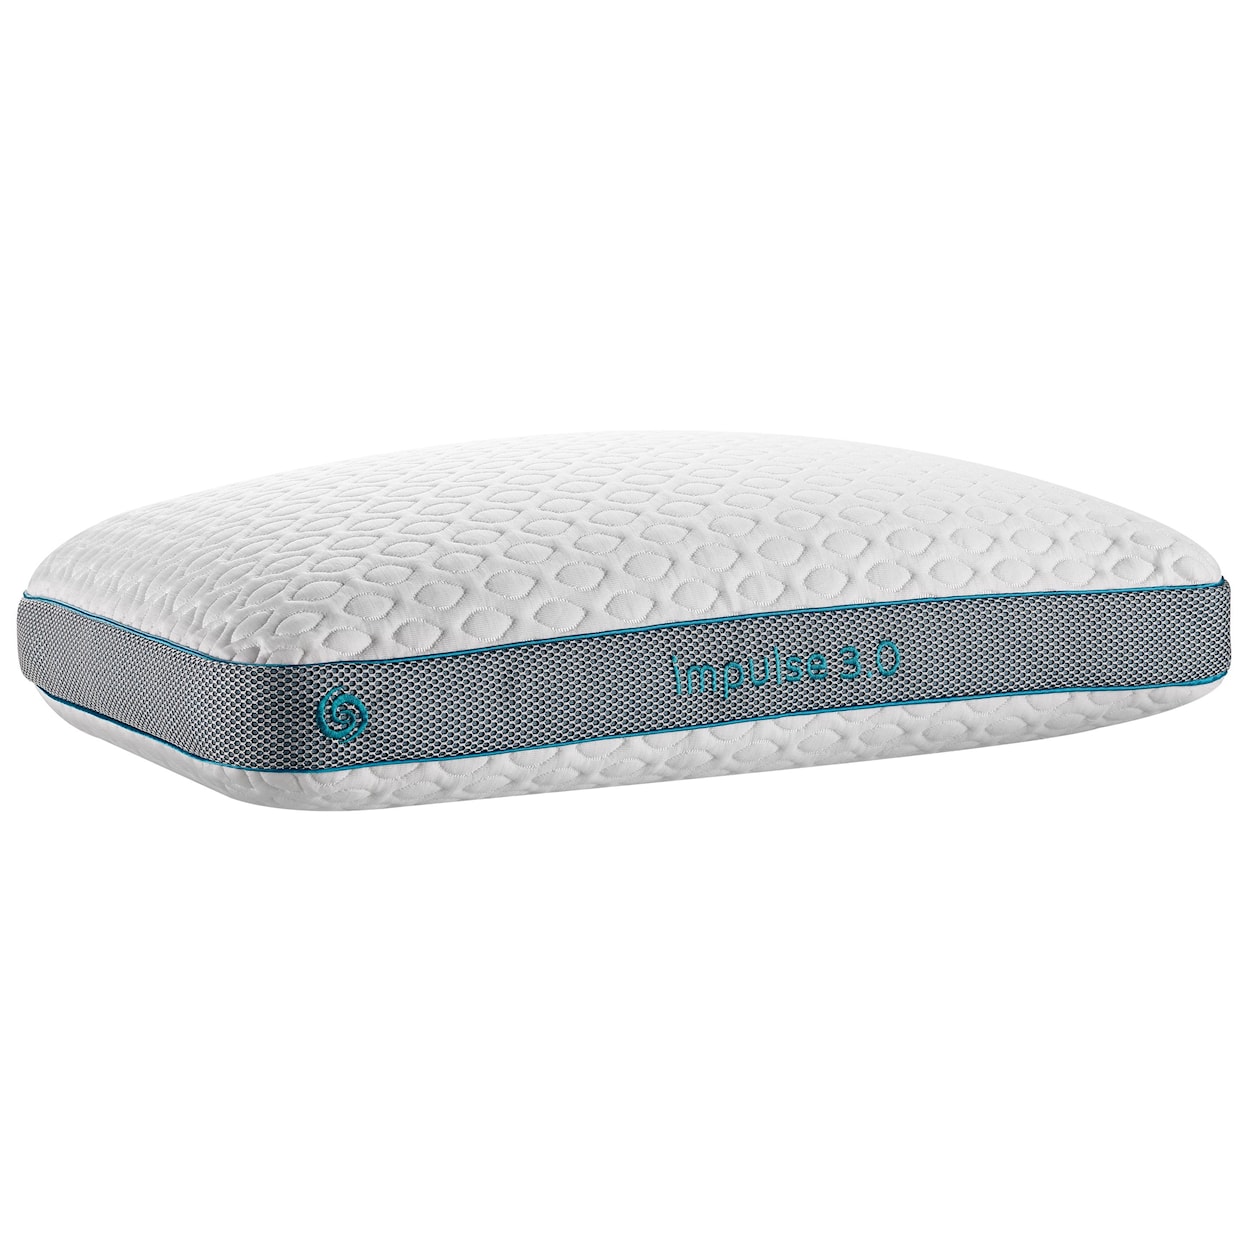 Bedgear Impulse 3.0 Pillow Impulse 3.0 Pillow